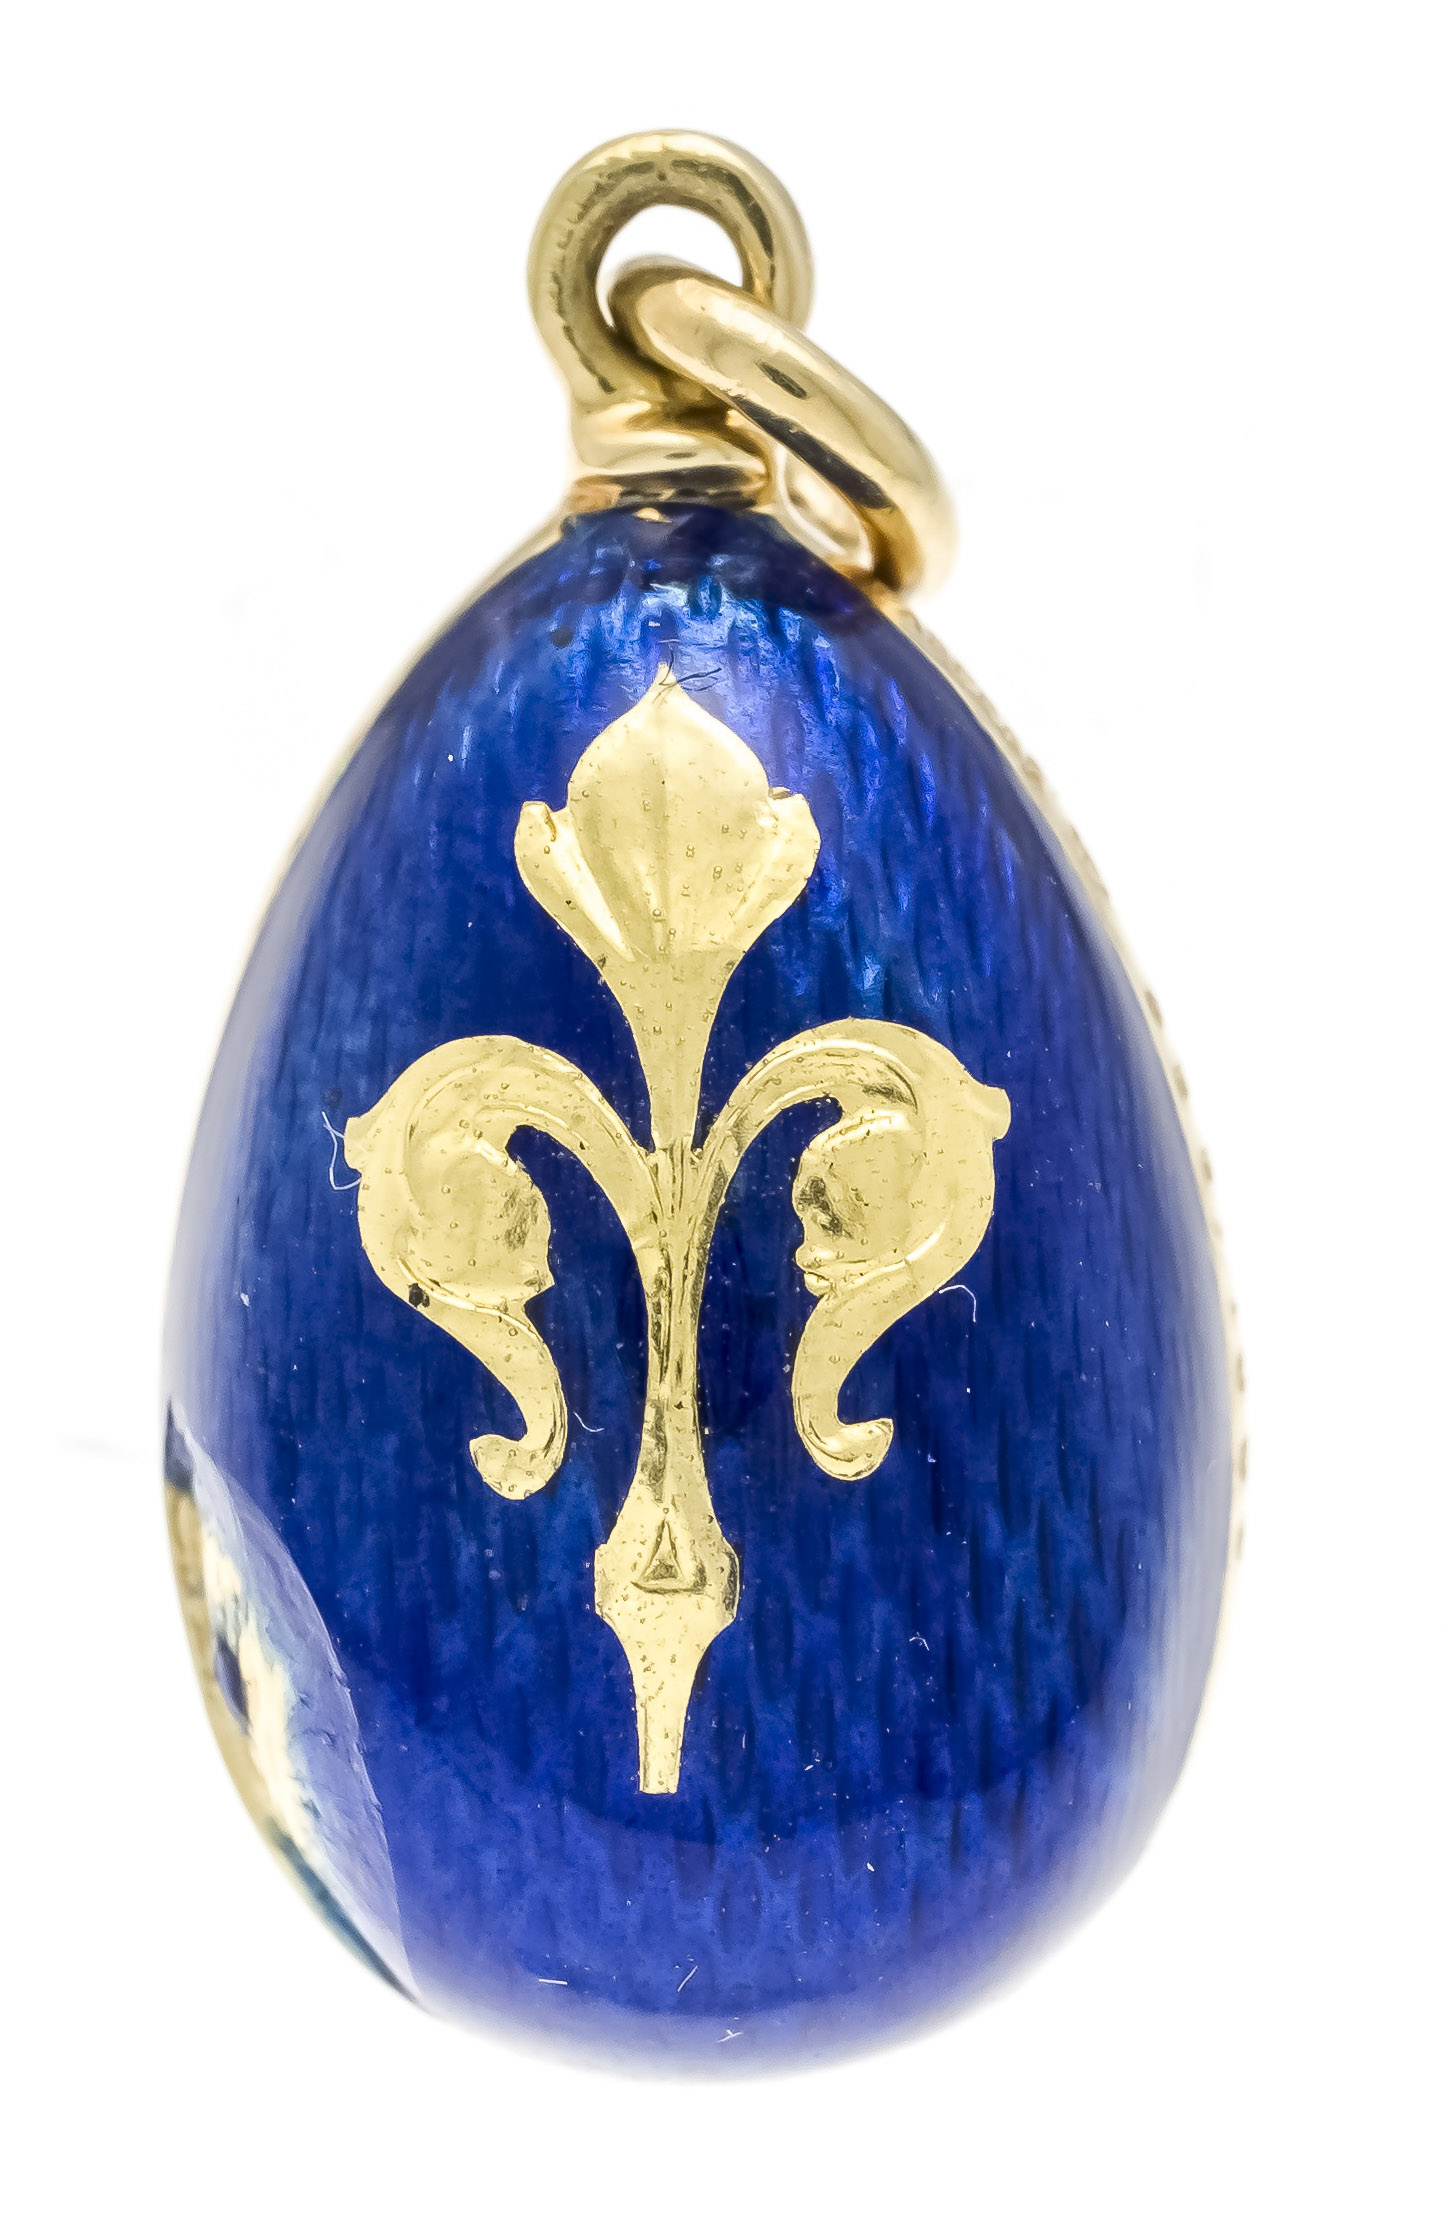 Egg pendant GG 750/000 with lily motif on blue enamel, enamel damaged in 2 places, l. 26 mm, Fabergé